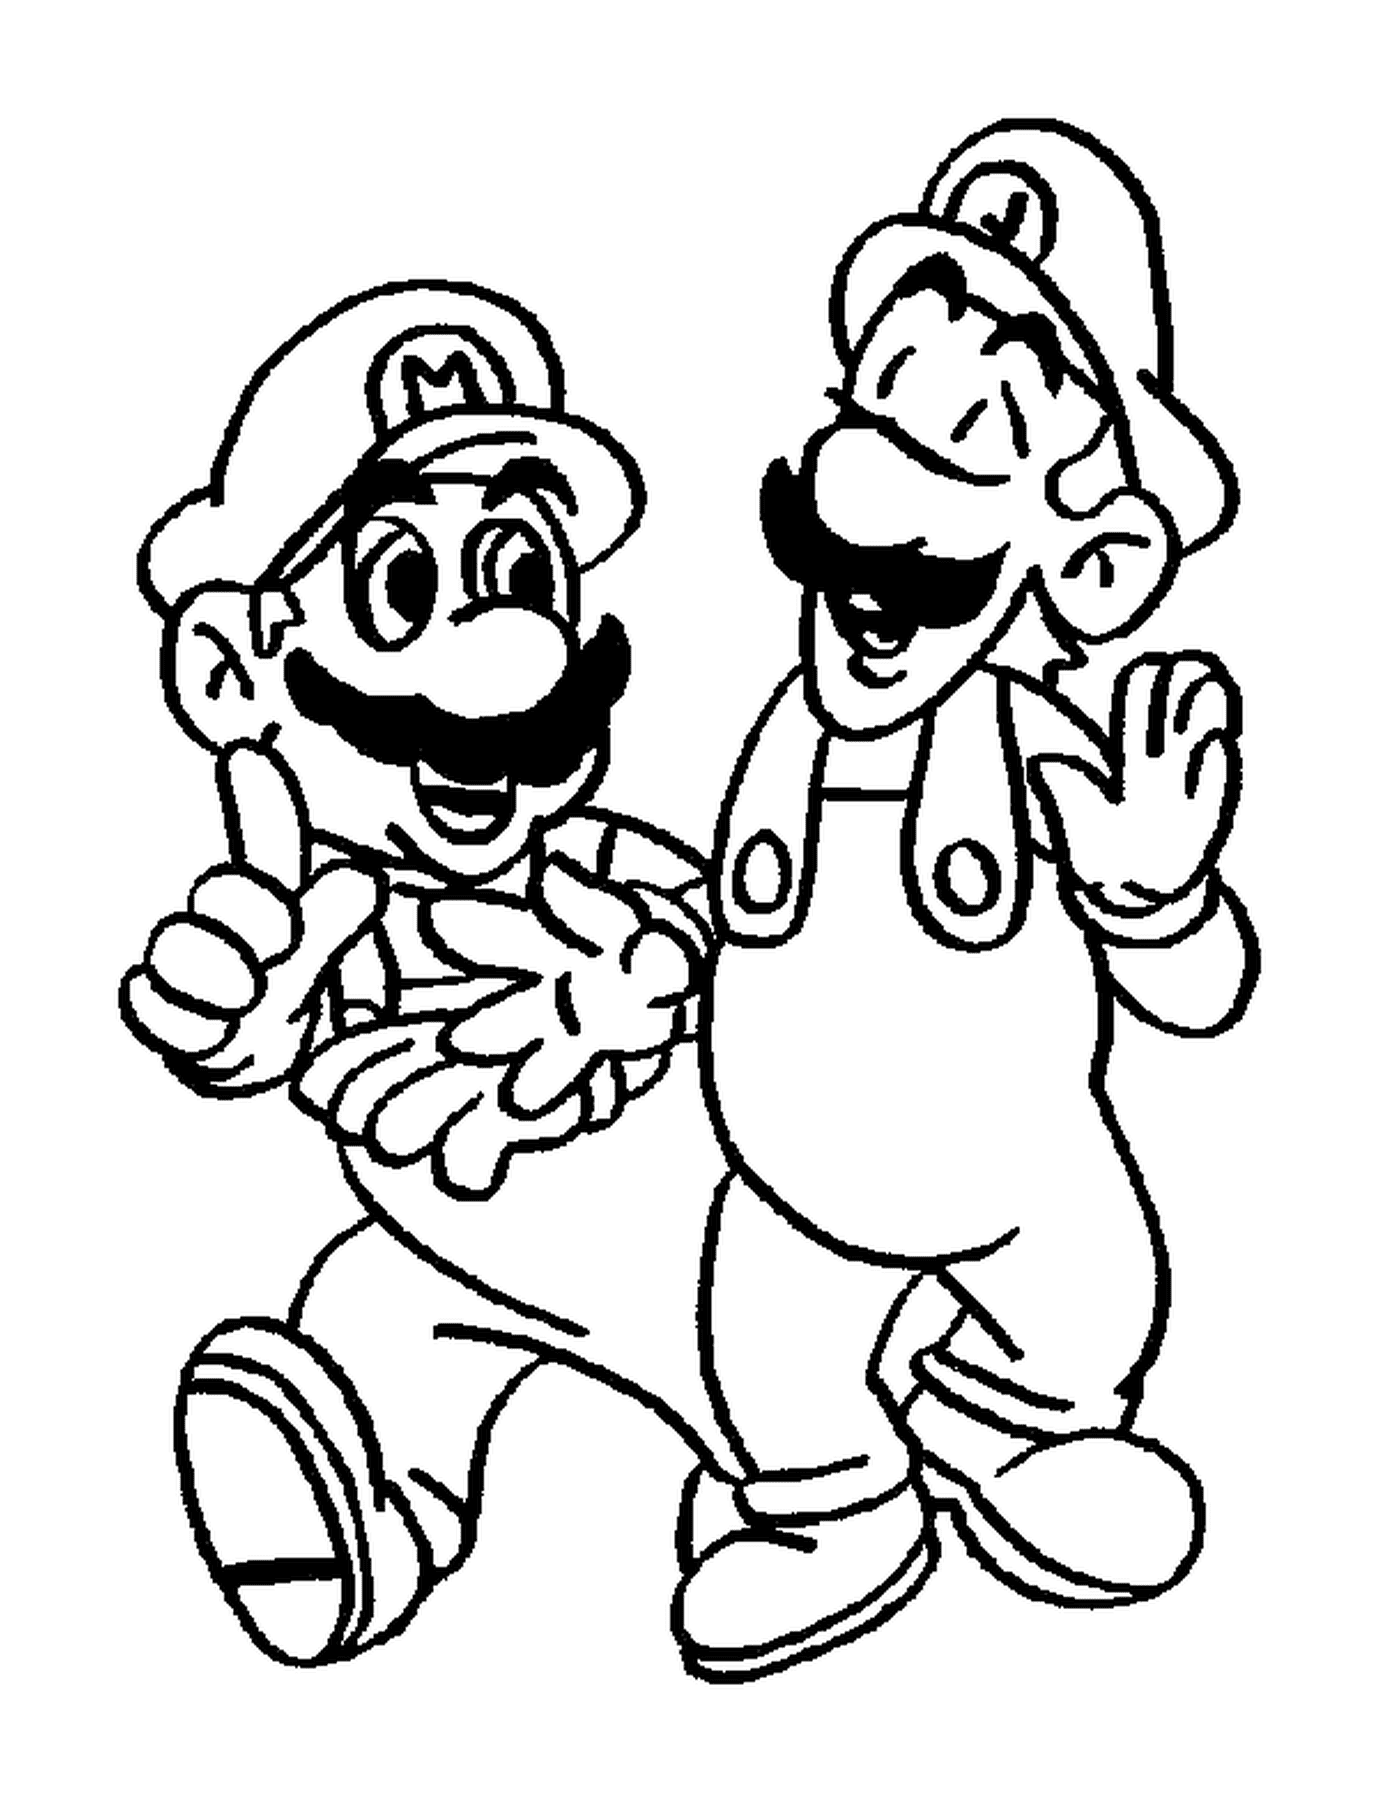  Mario e Luigi, dois irmãos inseparáveis 